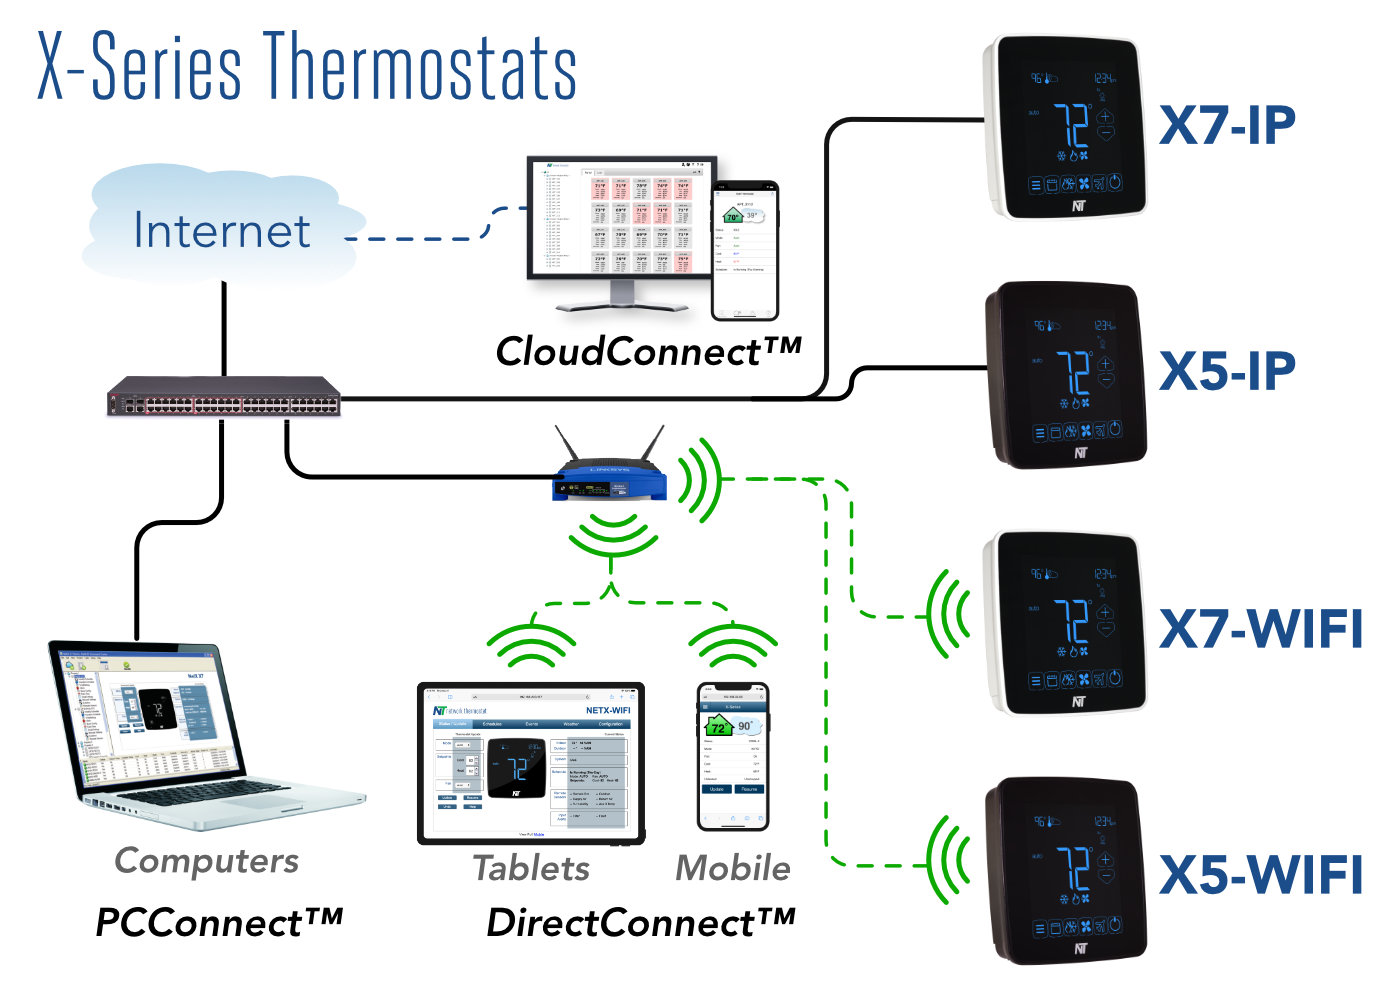 X-Series Thermostats